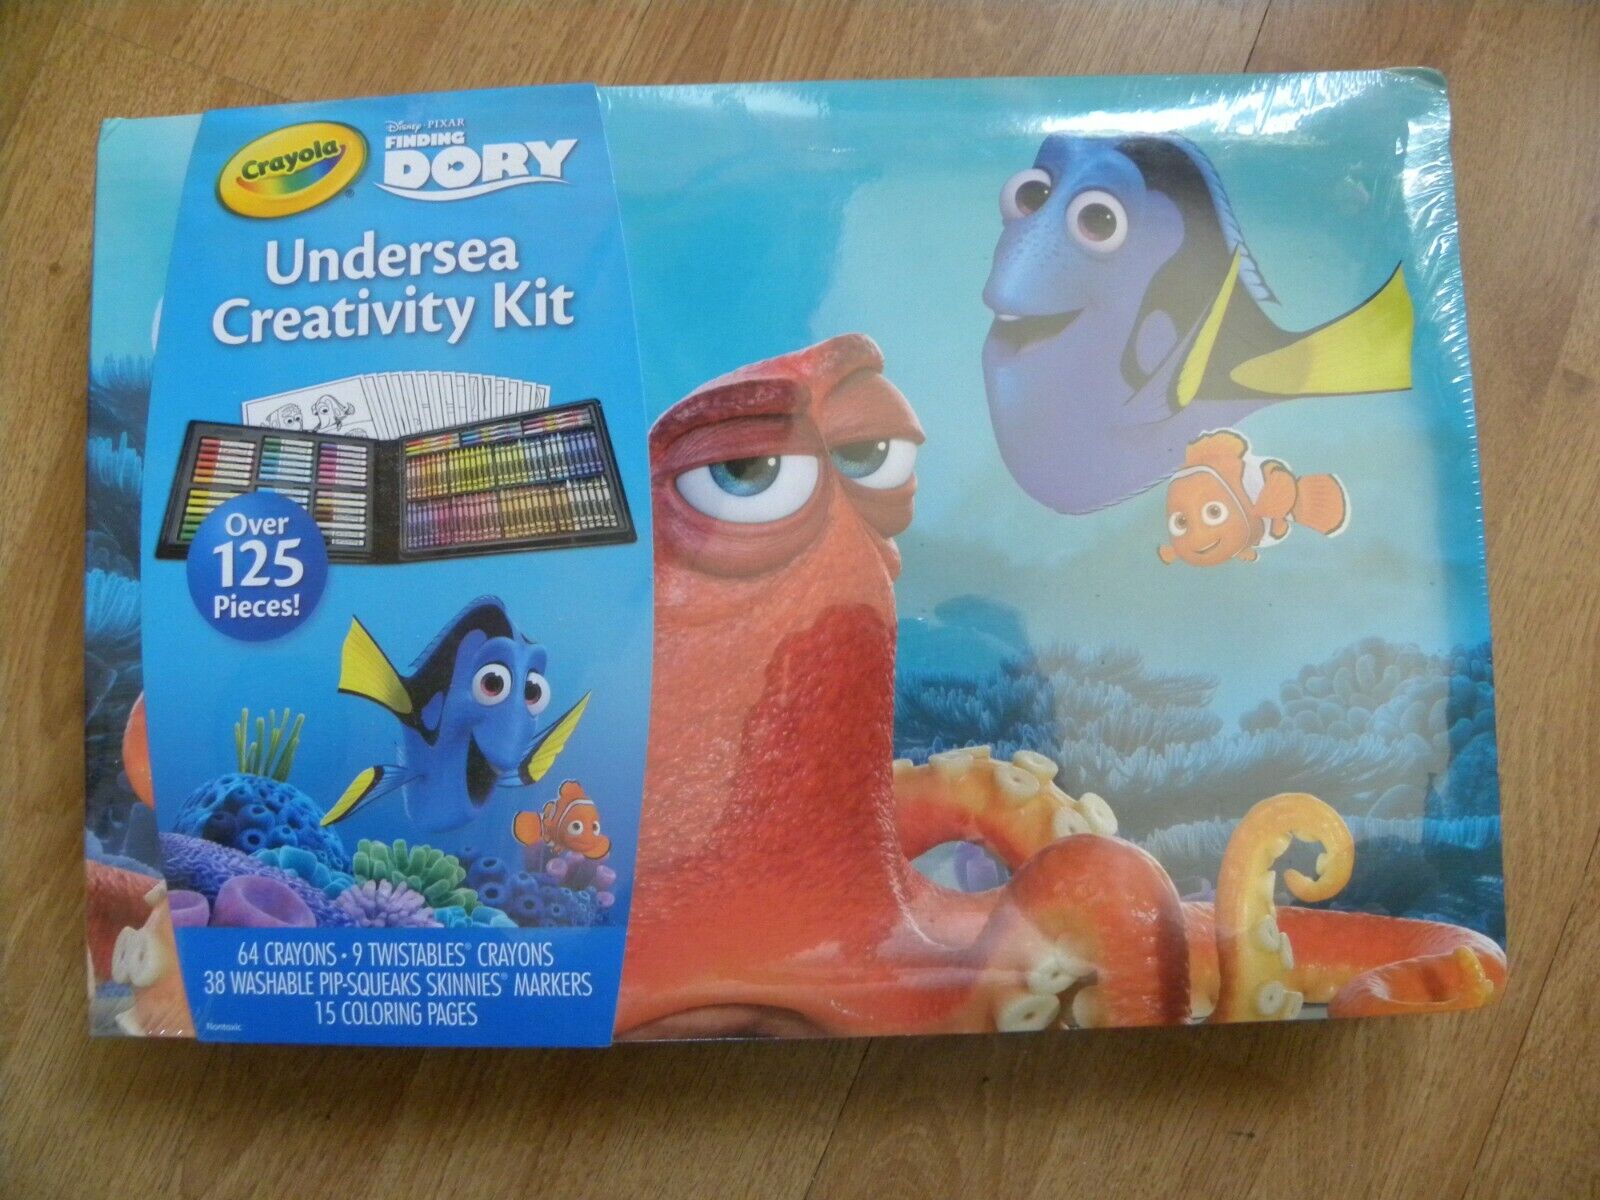 Disney Pixar Finding Dory Undersea Creativity Kit by Crayola - NEW SEALED